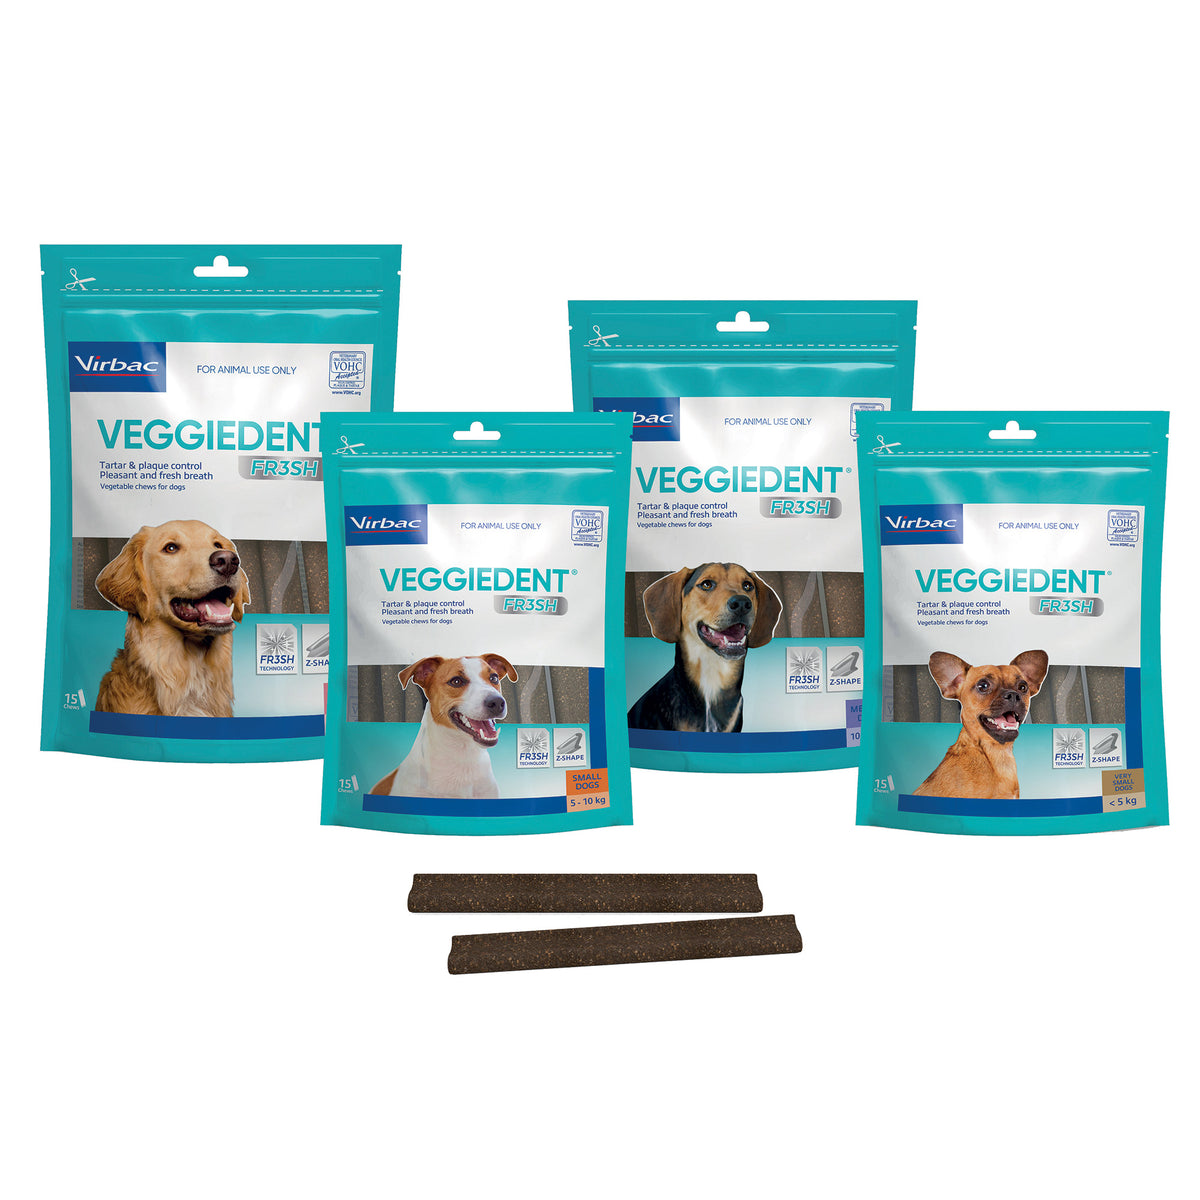 Virbac Veggiedent Dental Chews for Dogs